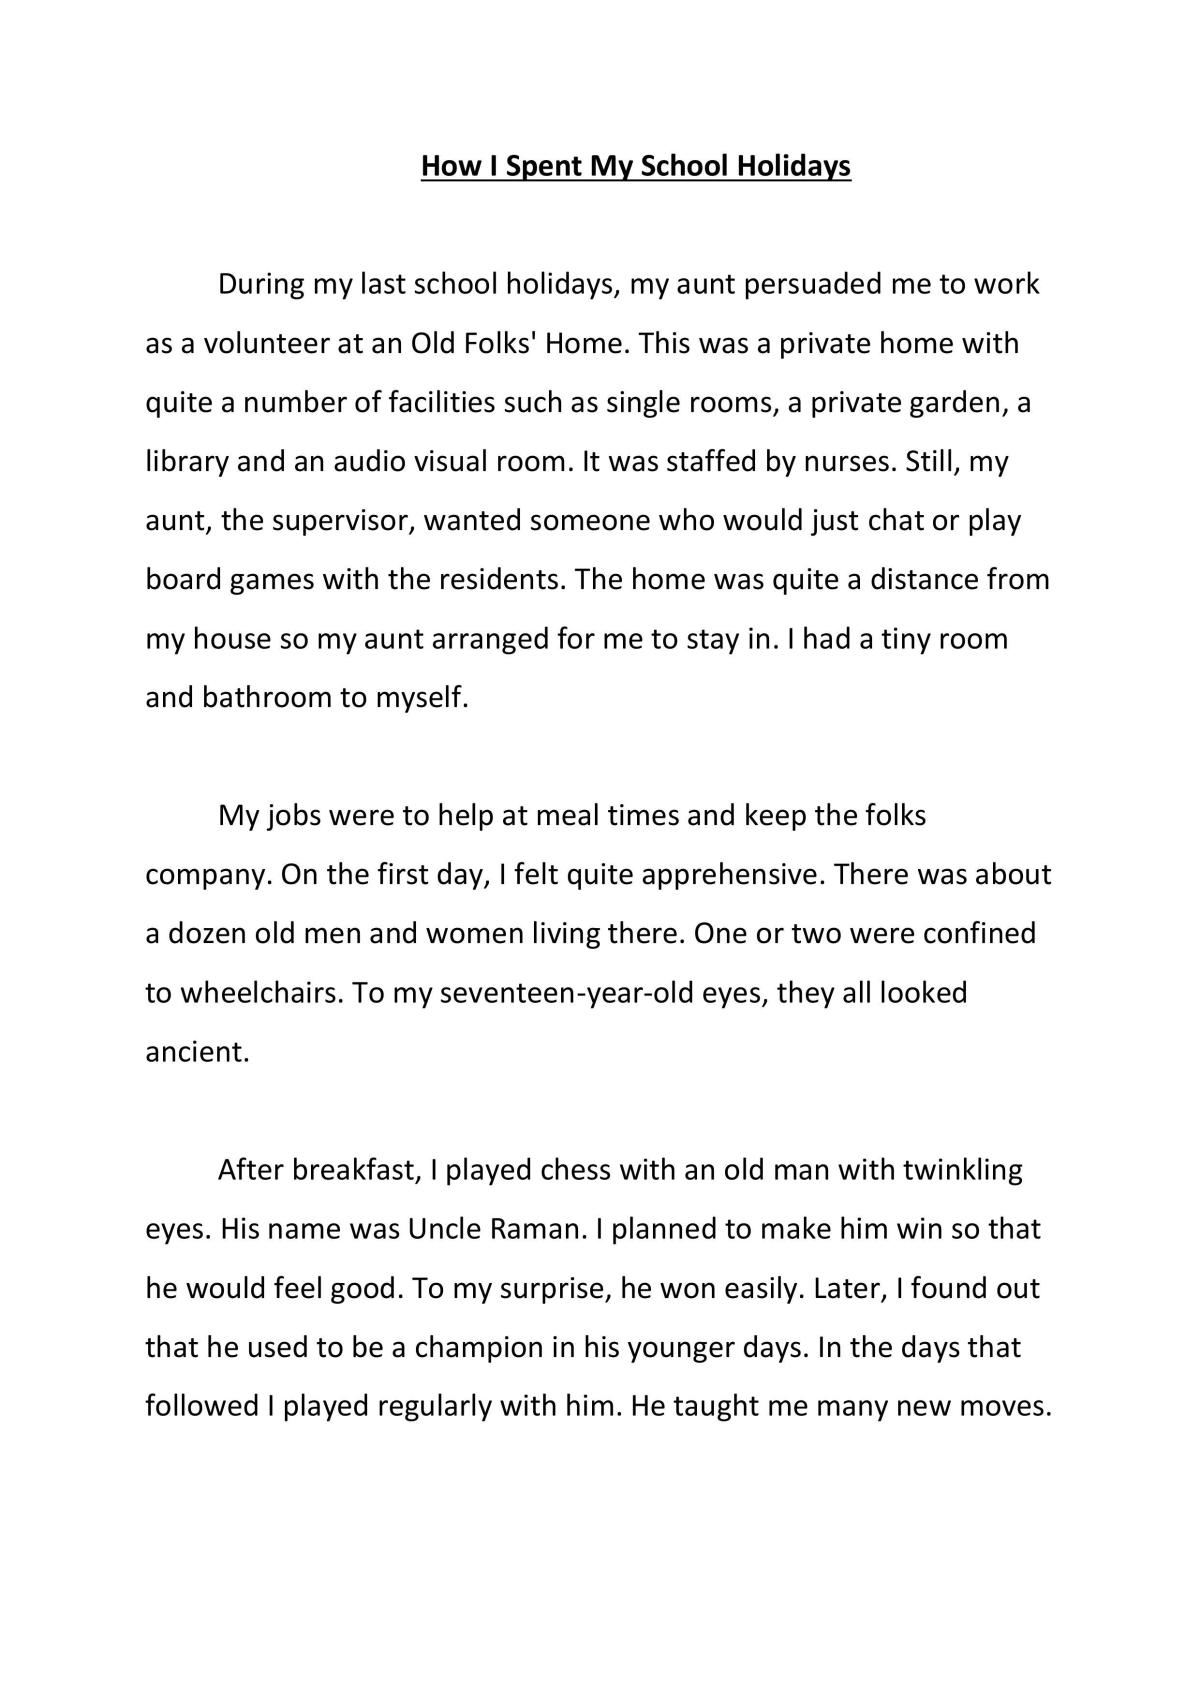 essay about my school holidays